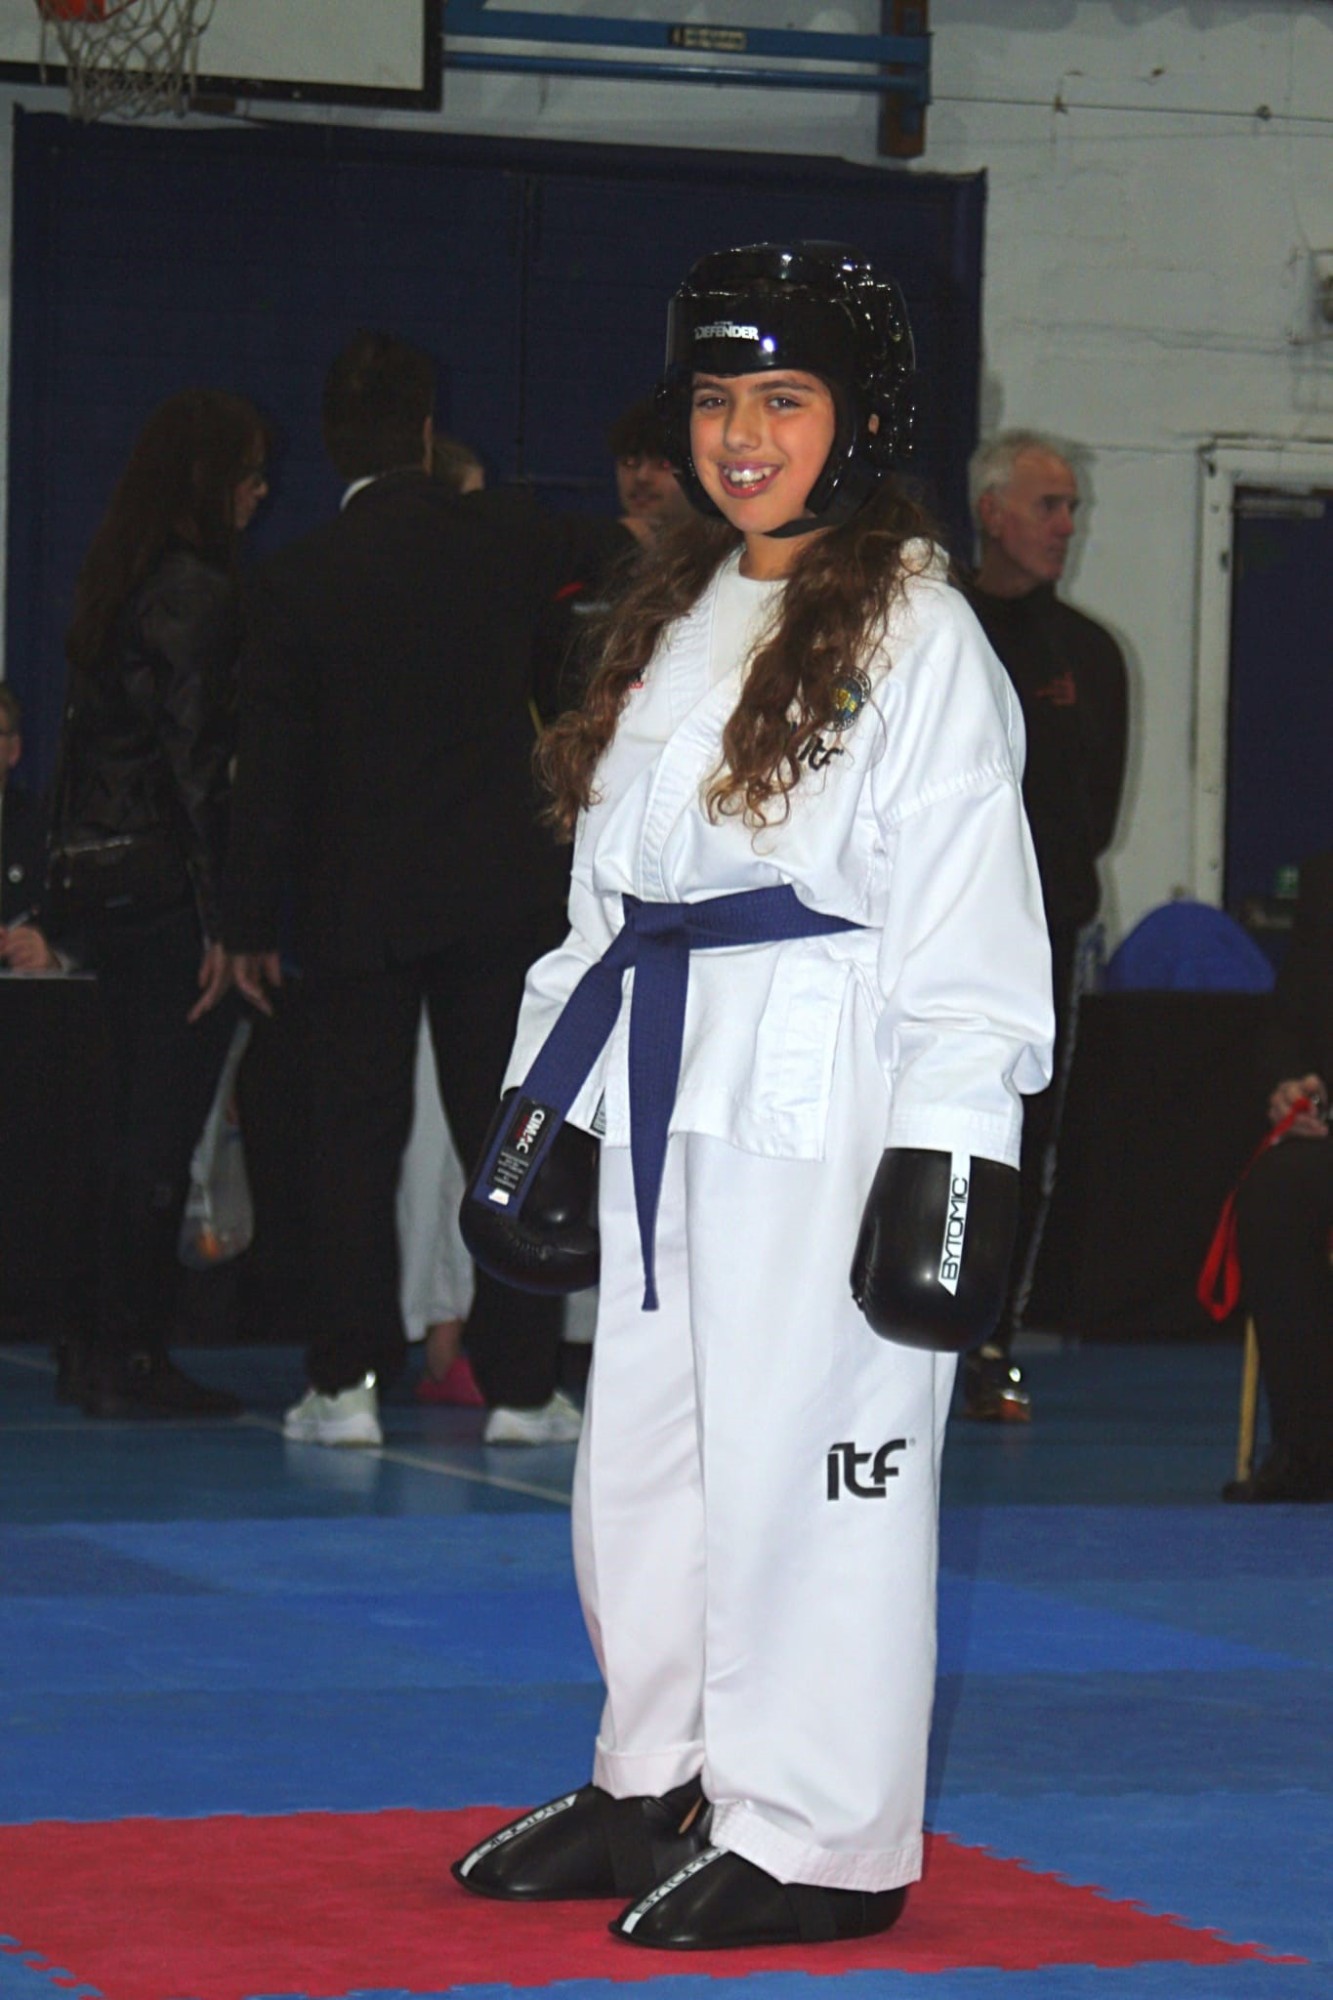 Ilektra at the British Taekwondo National Championship